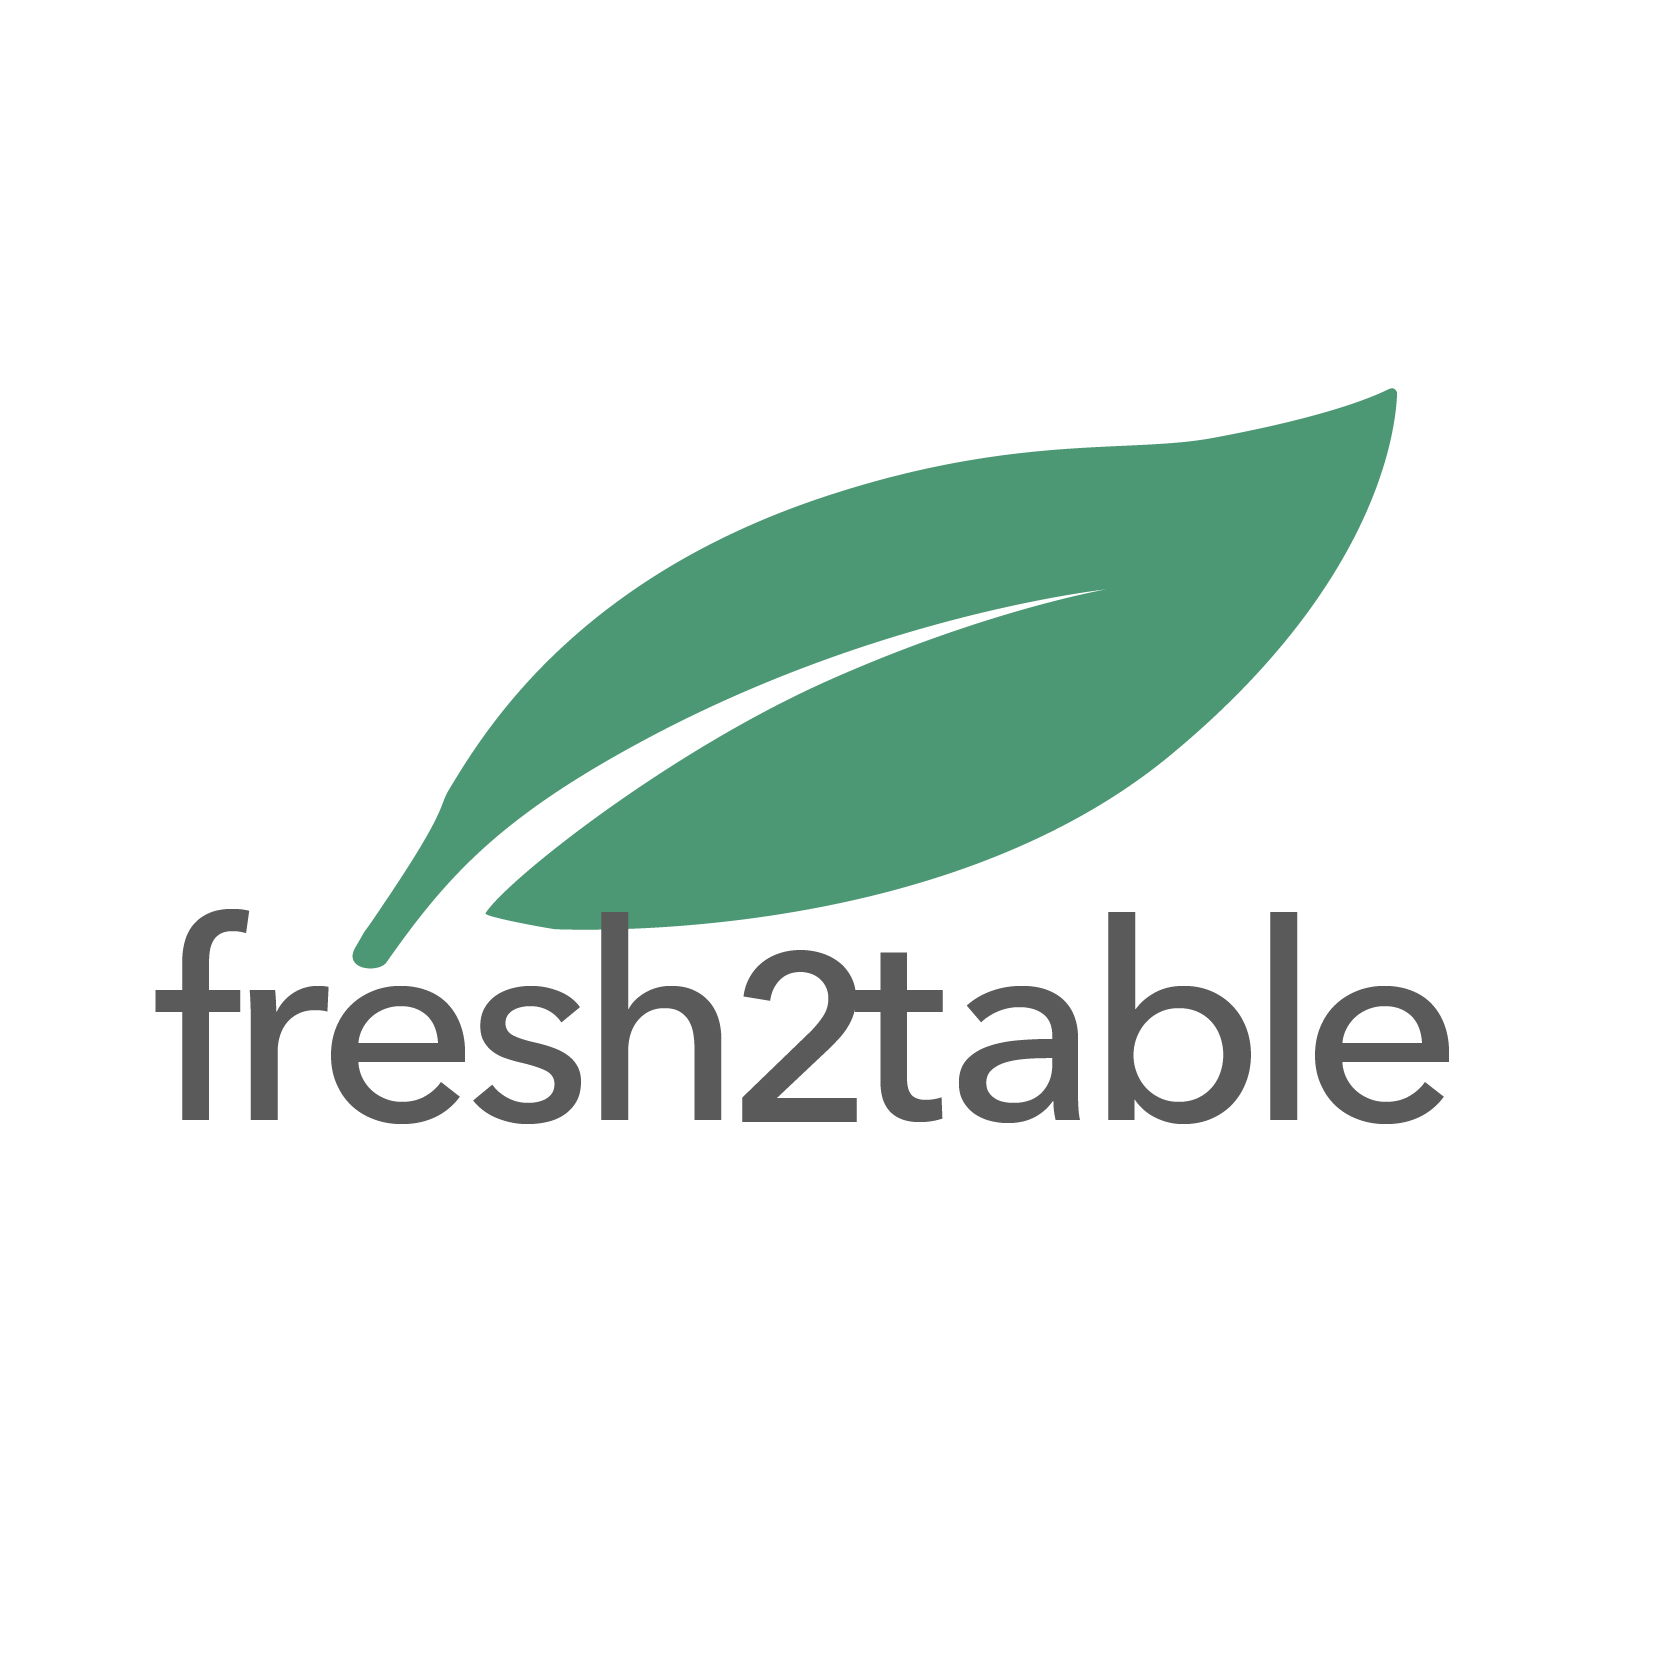 fresh2 table